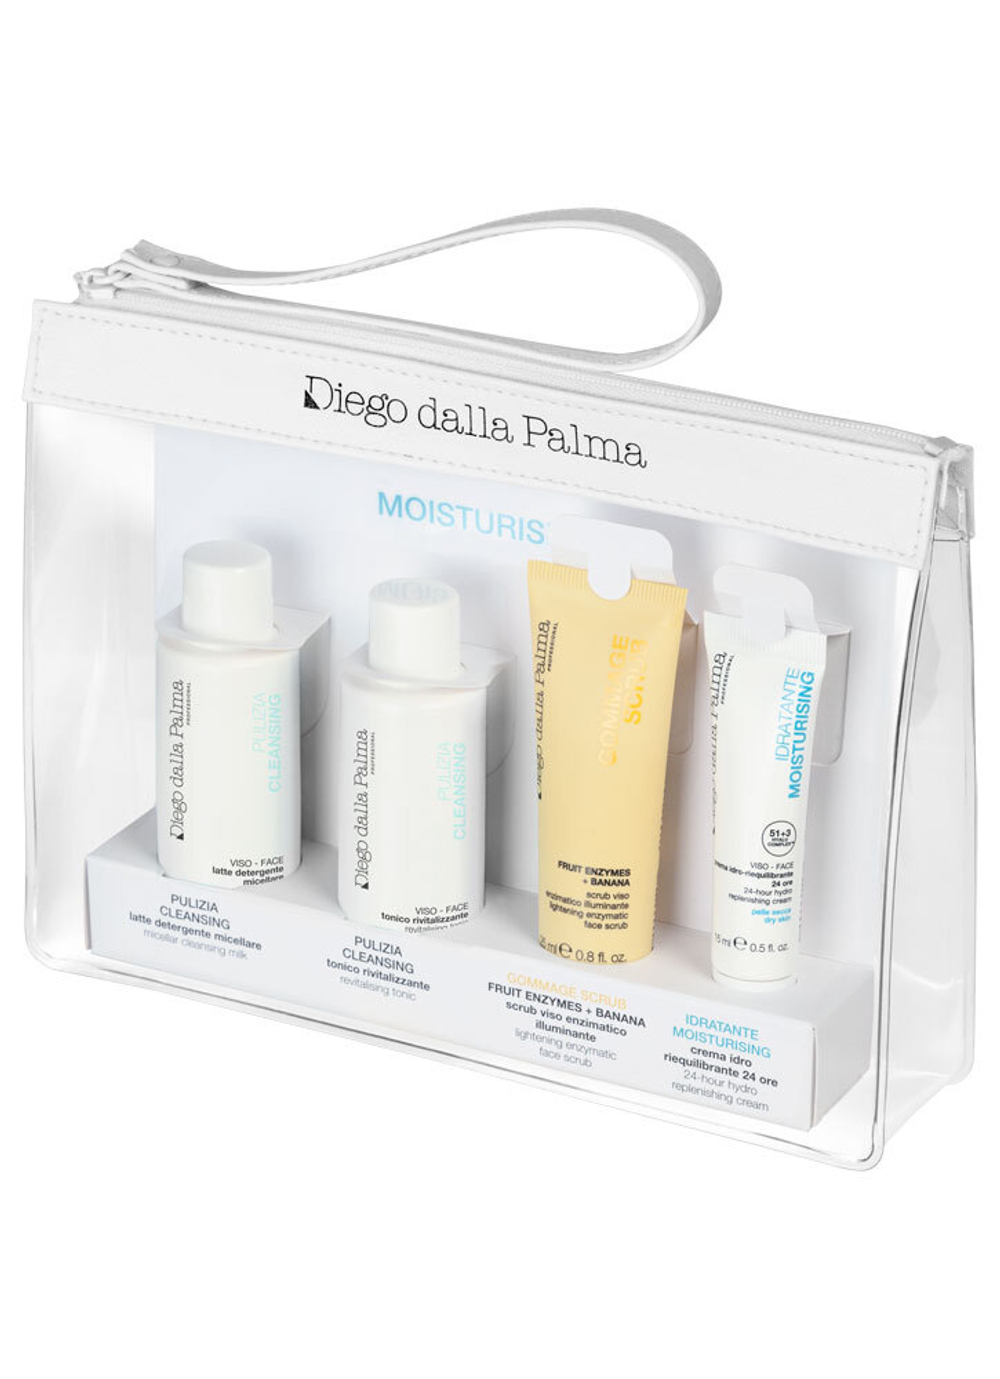 DIEGO DALLA PALMA Kit moisturizing (travel size)